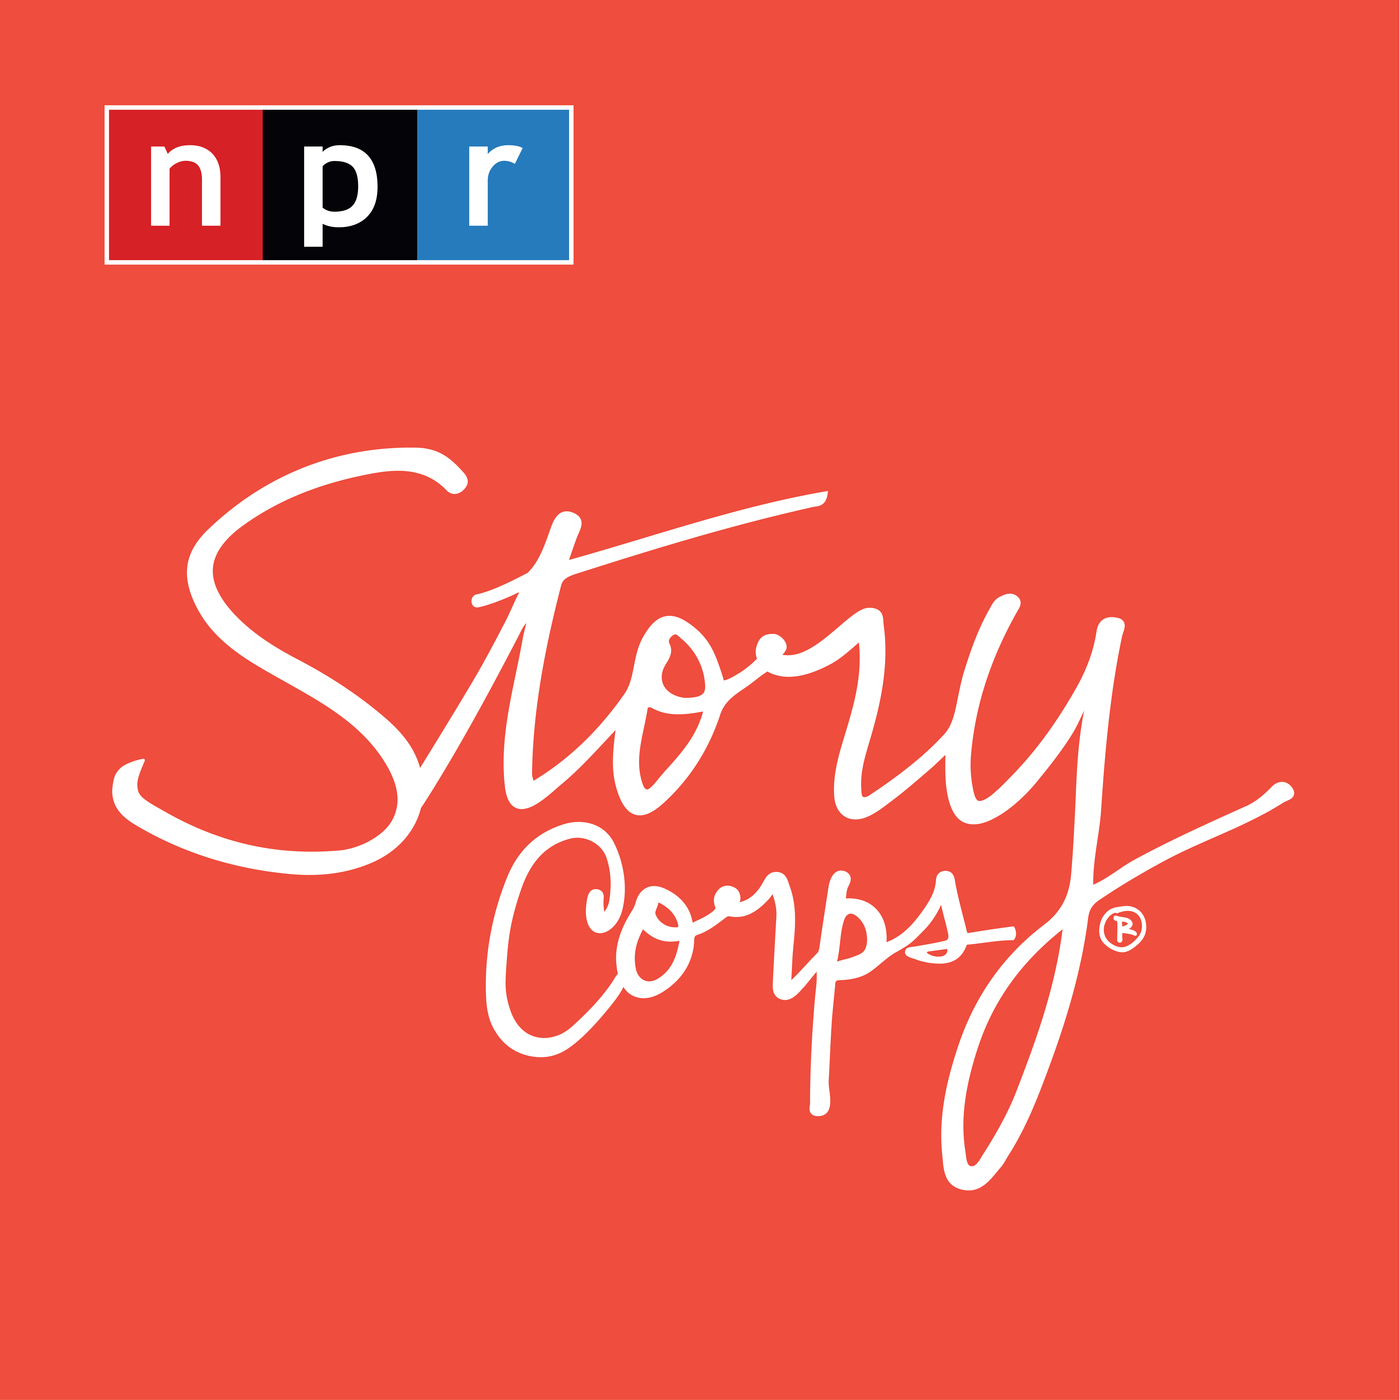 StoryCorps logo